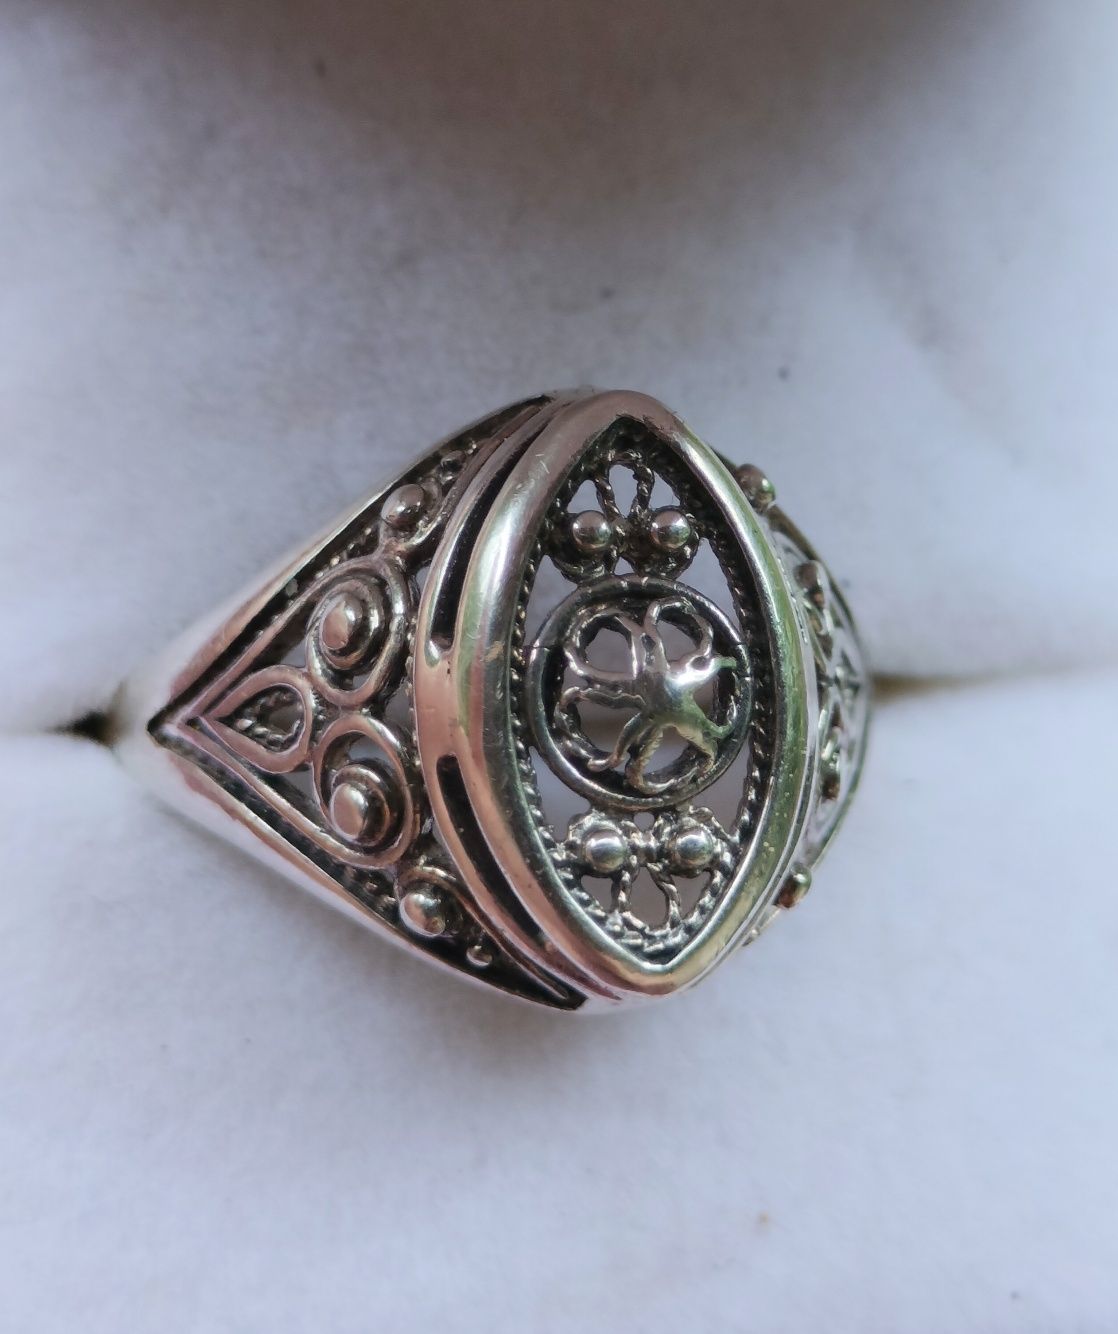 Piękny ażurowy pierścionek. Stare srebro. Rusek